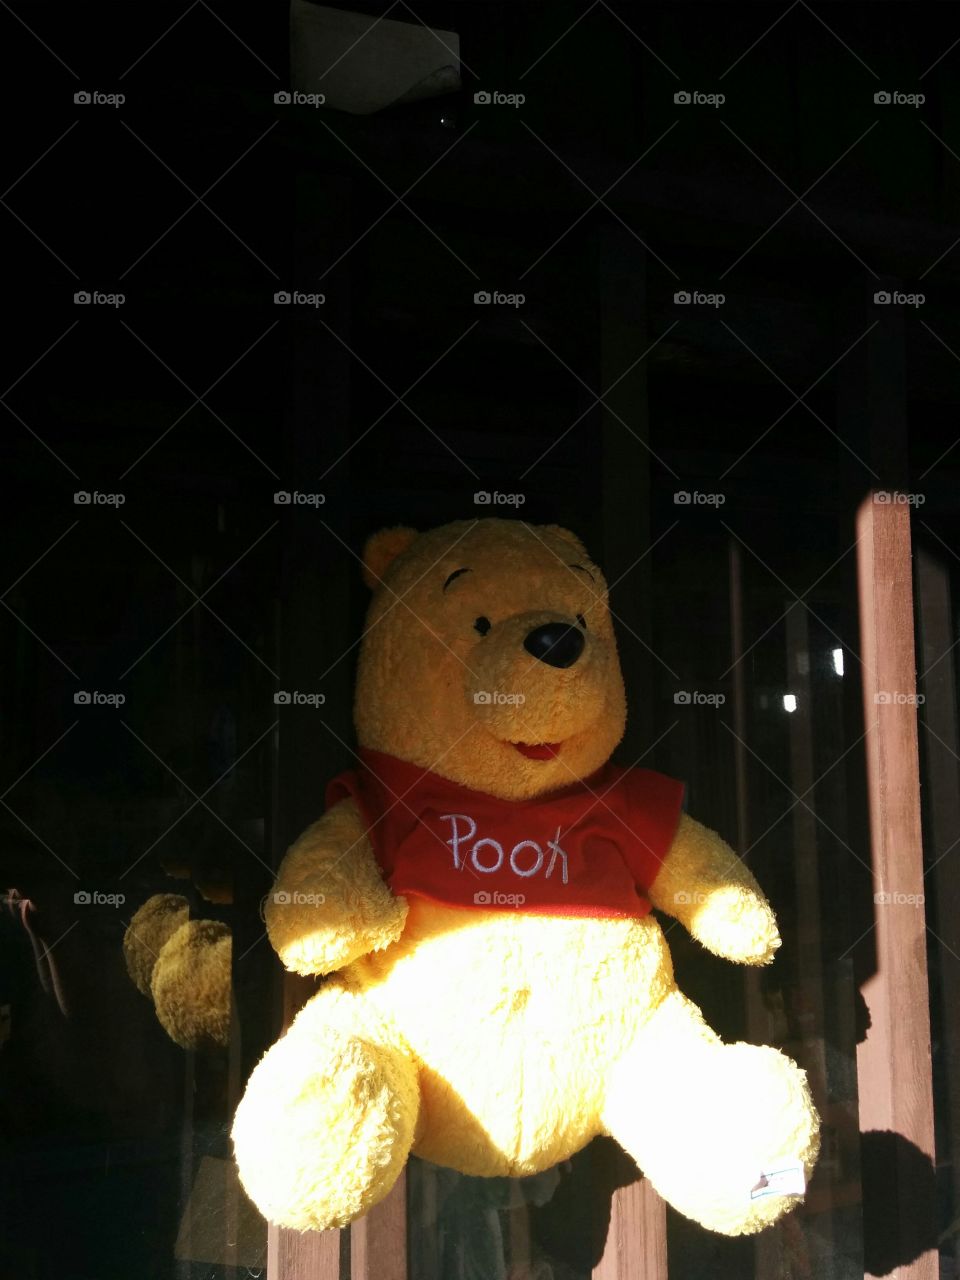 Pooh in Japan